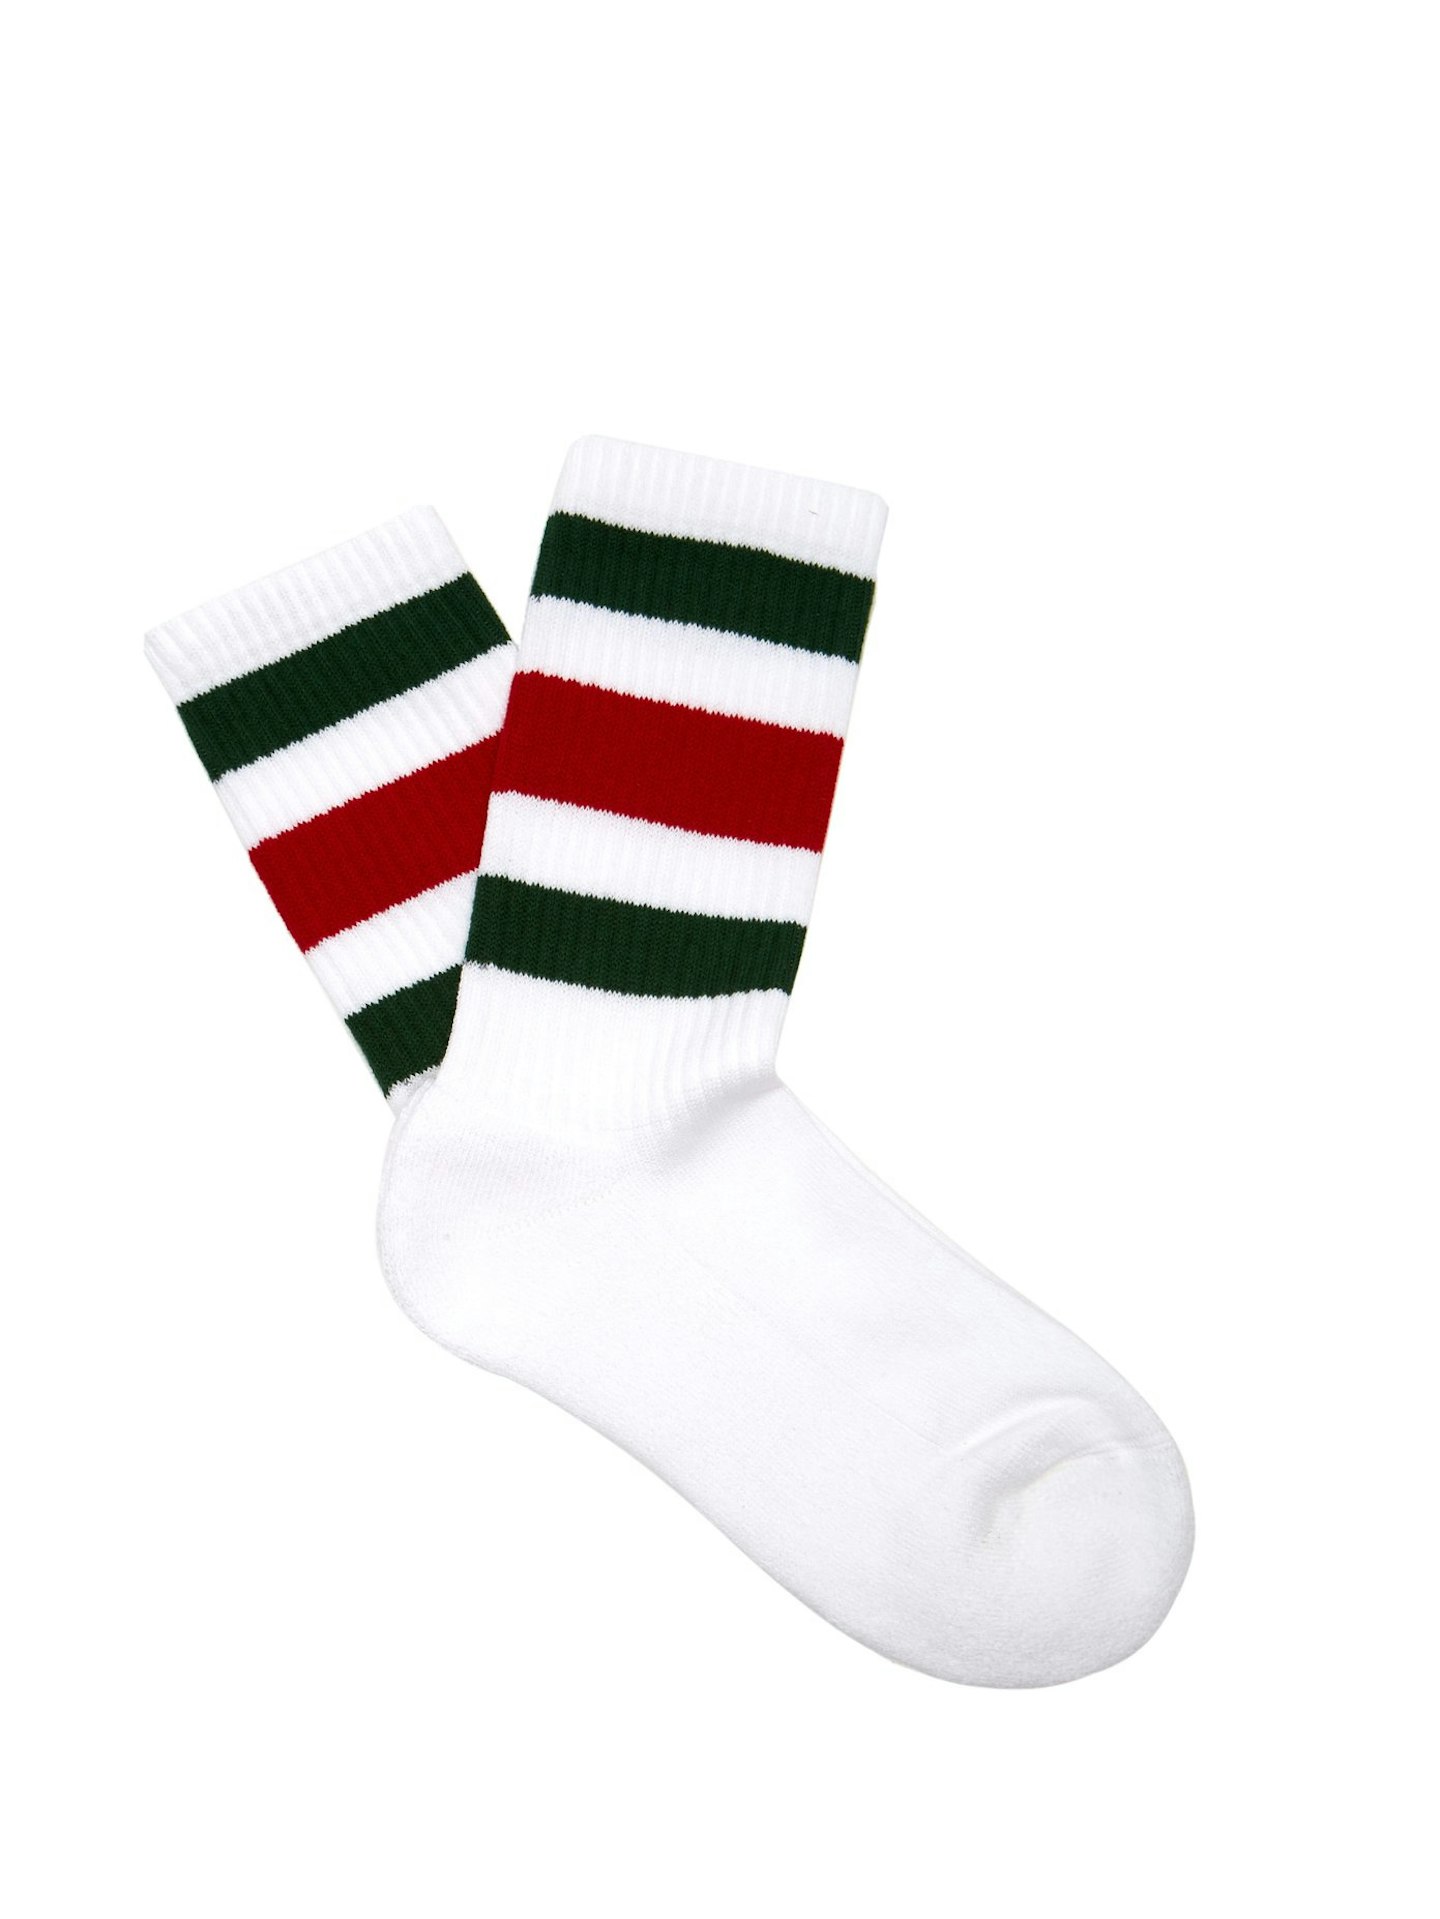 Gucci, Web-Striped Cotton Blend Socks, £85, Matchesfashion.com